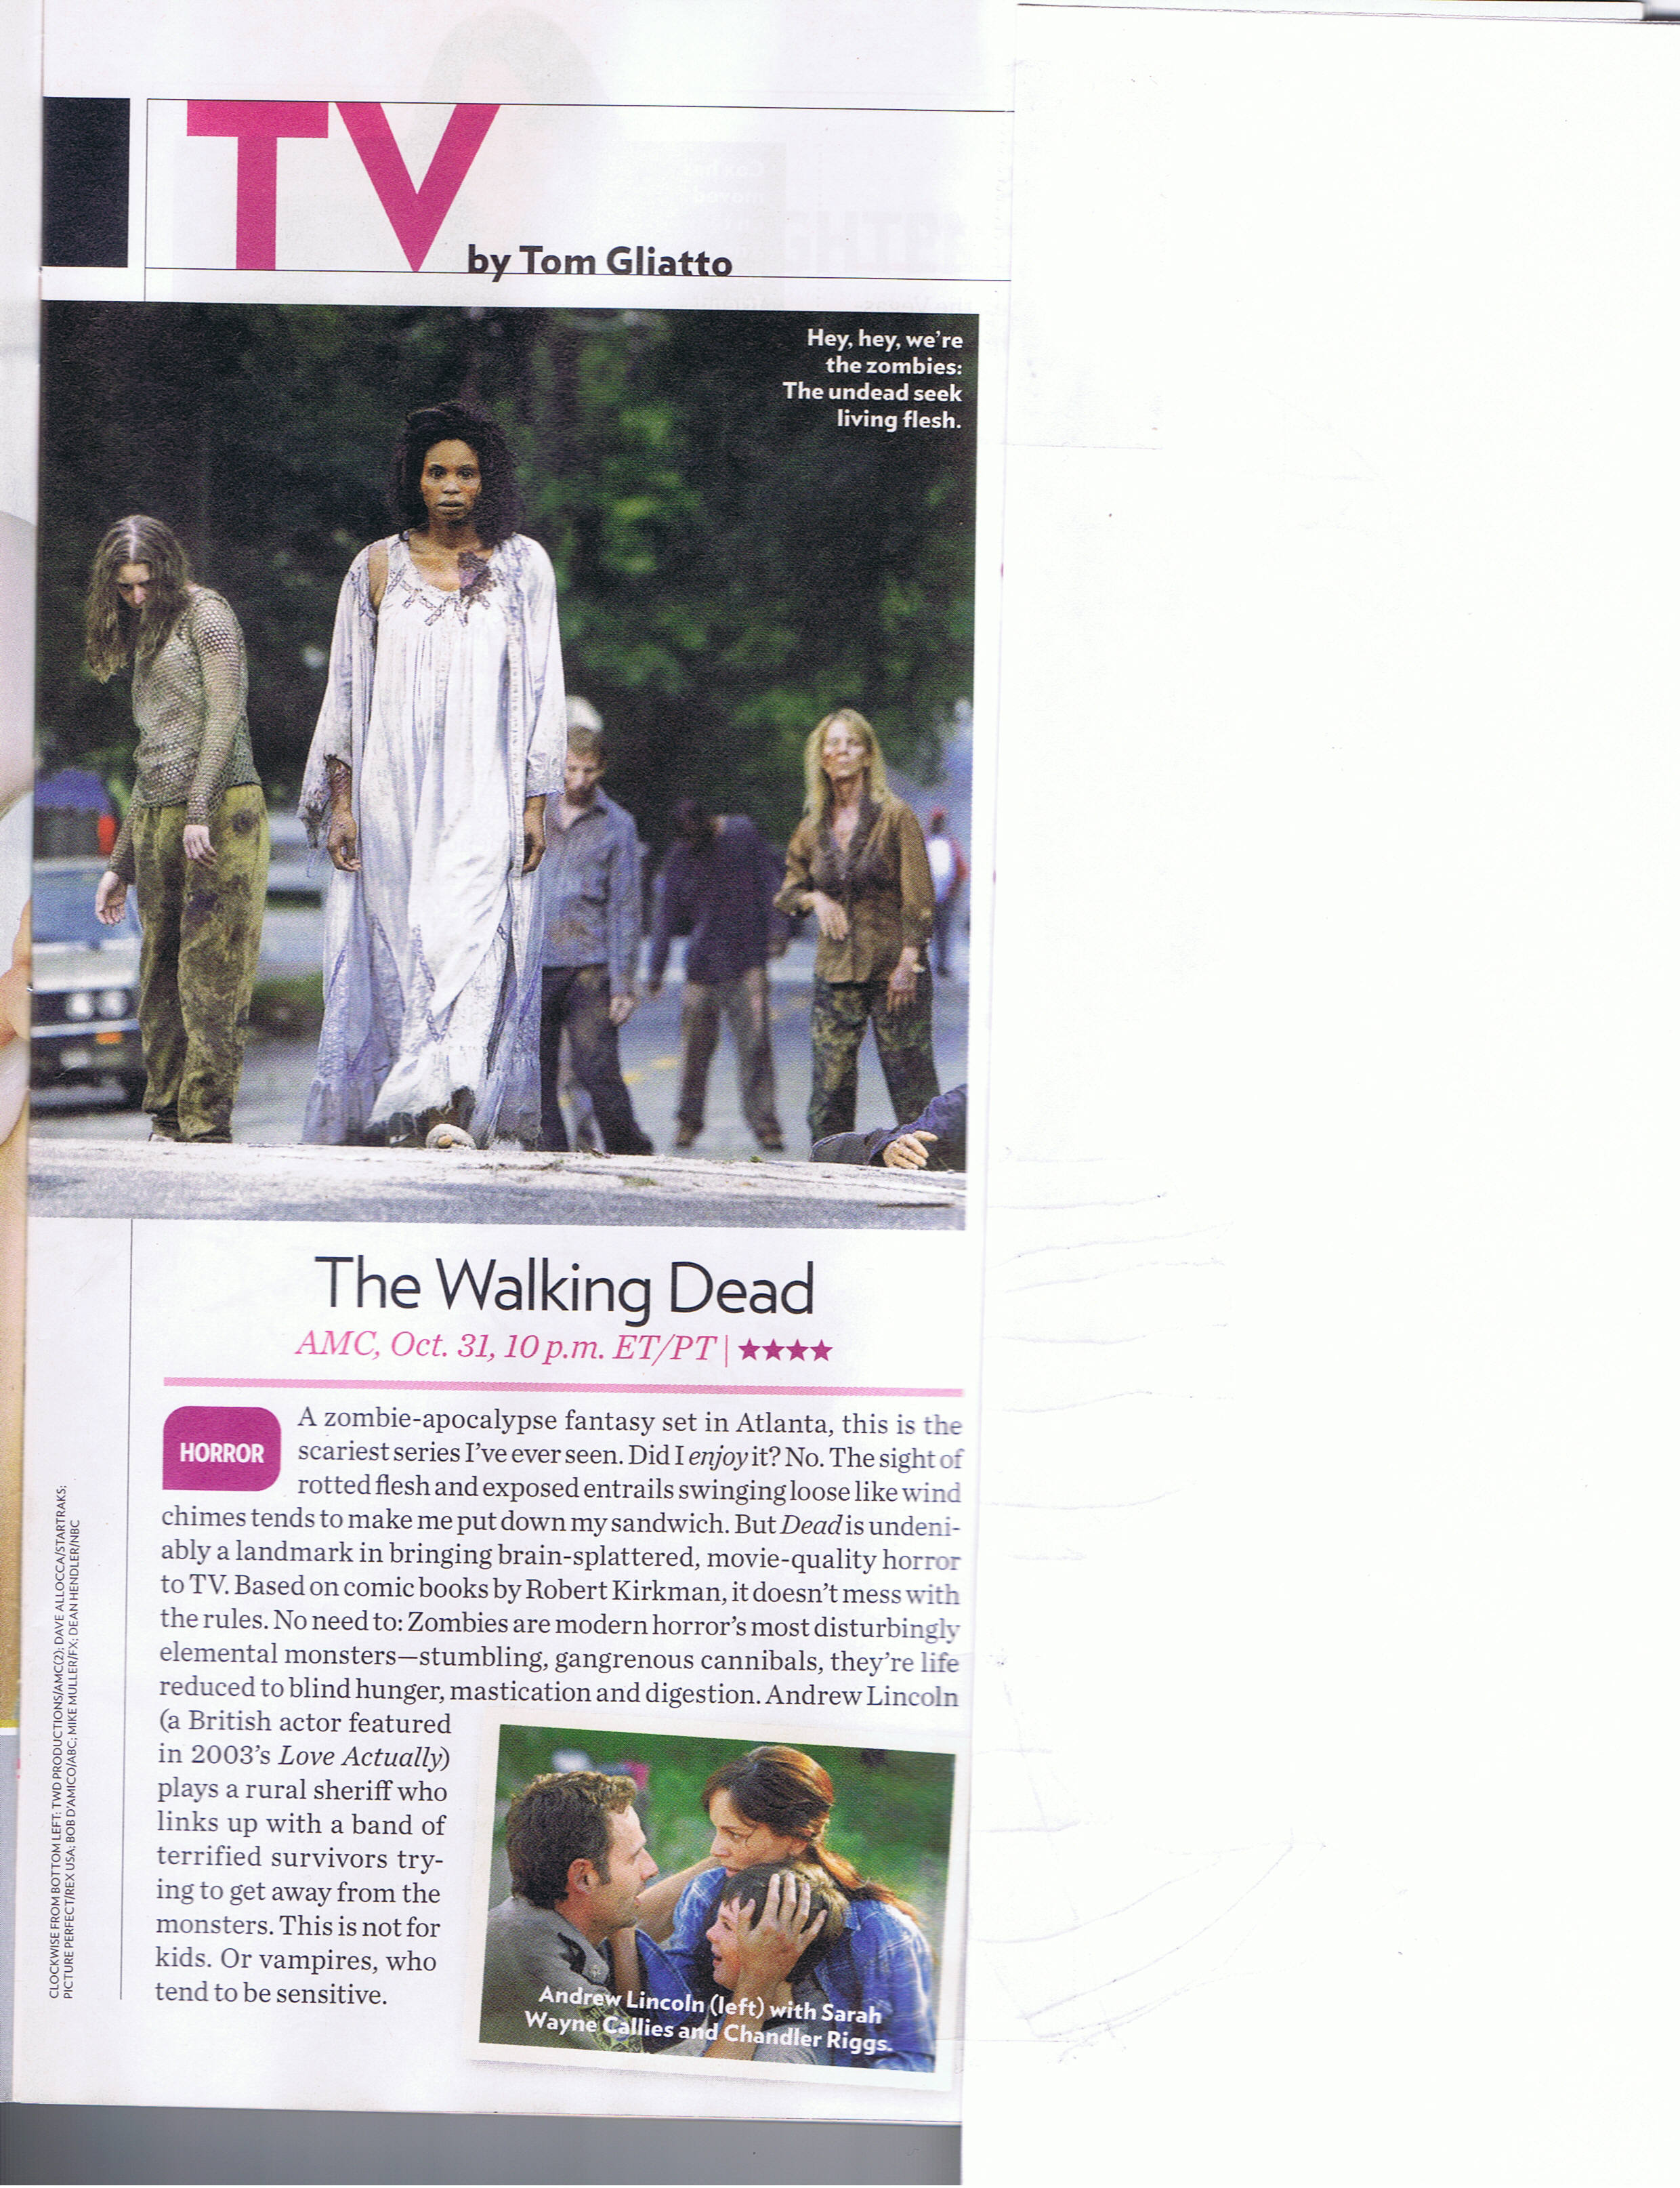 People magazine gave walking dead four stars